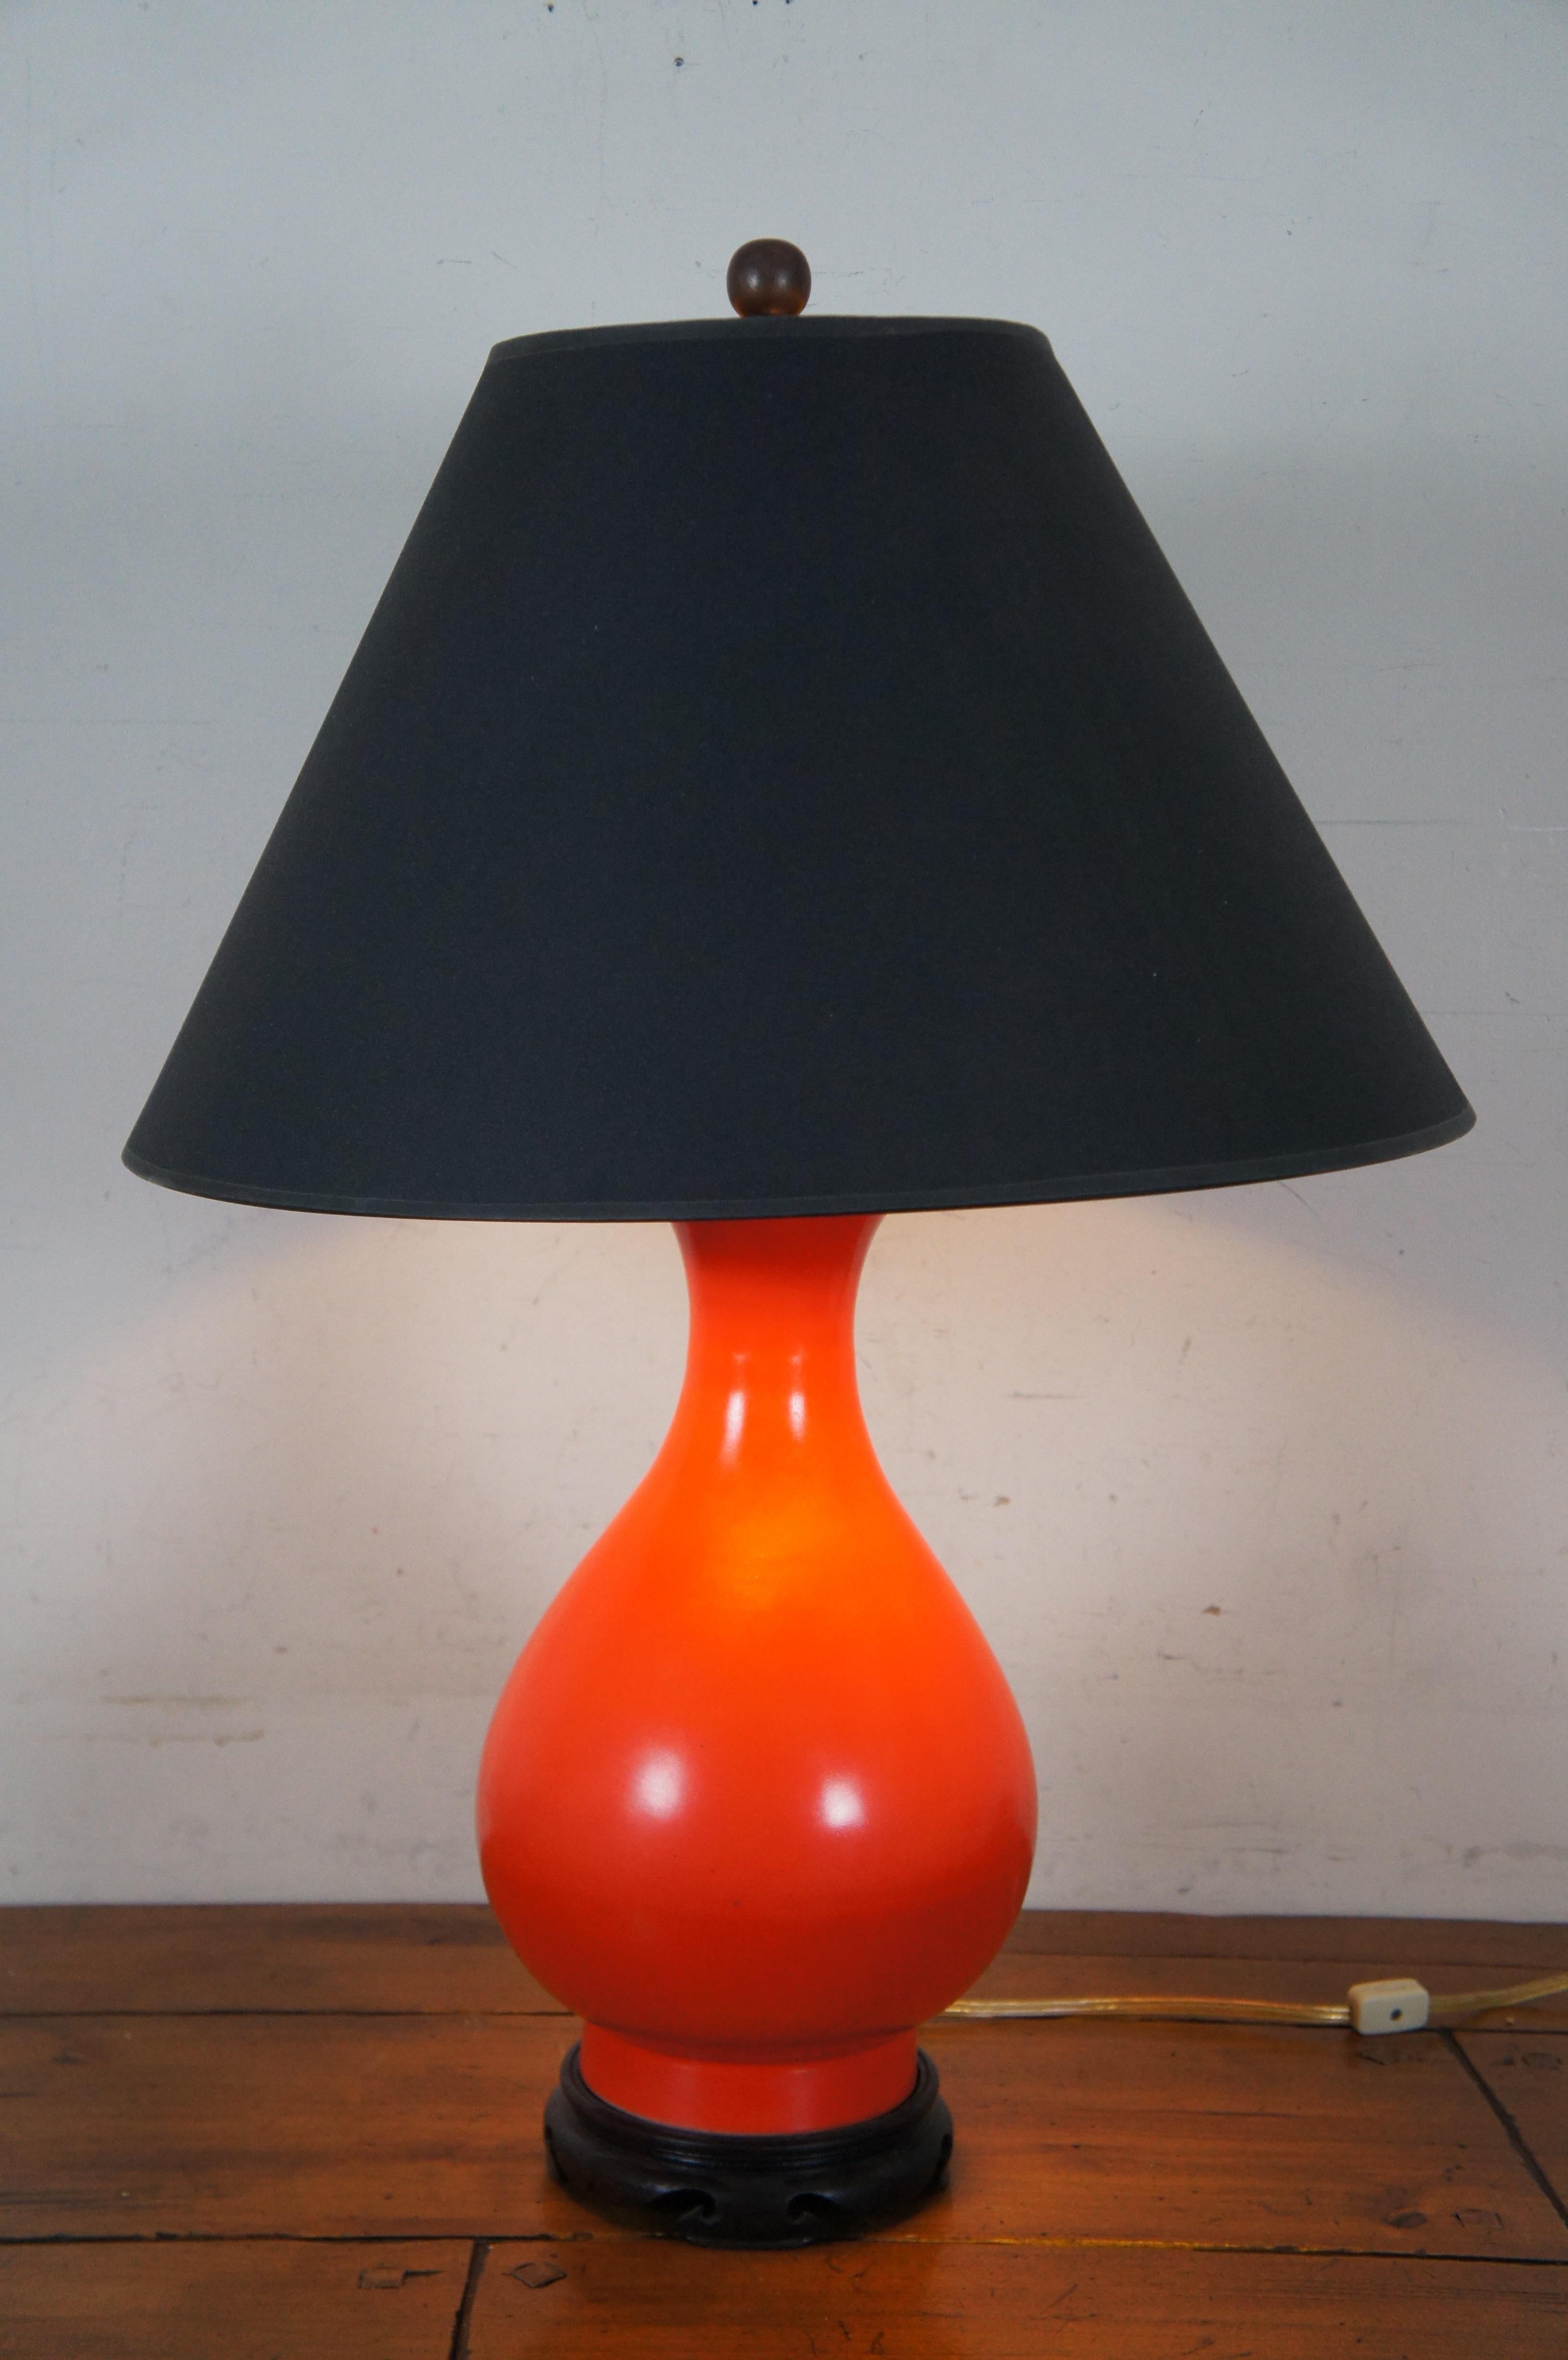 Windermere Lotus Arts Chinoiserie Orange Ceramic Mantel Vase Urn lamp 30